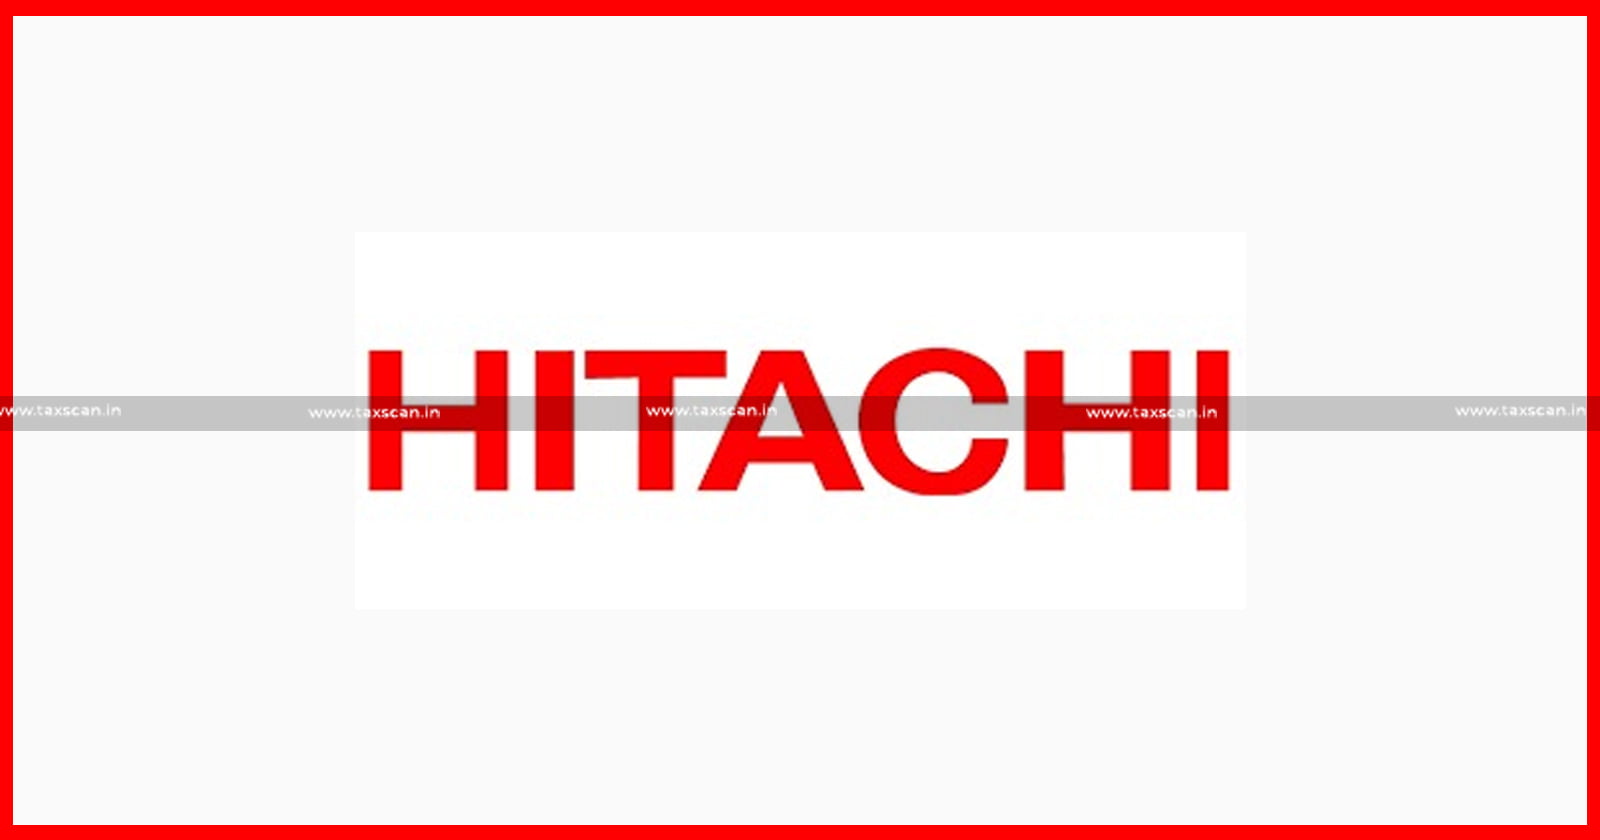 Chartered Accountant Careers In Hitachi - MBA Vacancies In Hitachi - MBA Jobs In Hitachi - MBA Opportunities In Hitachi - Hitachi Careers - TAXSCAN